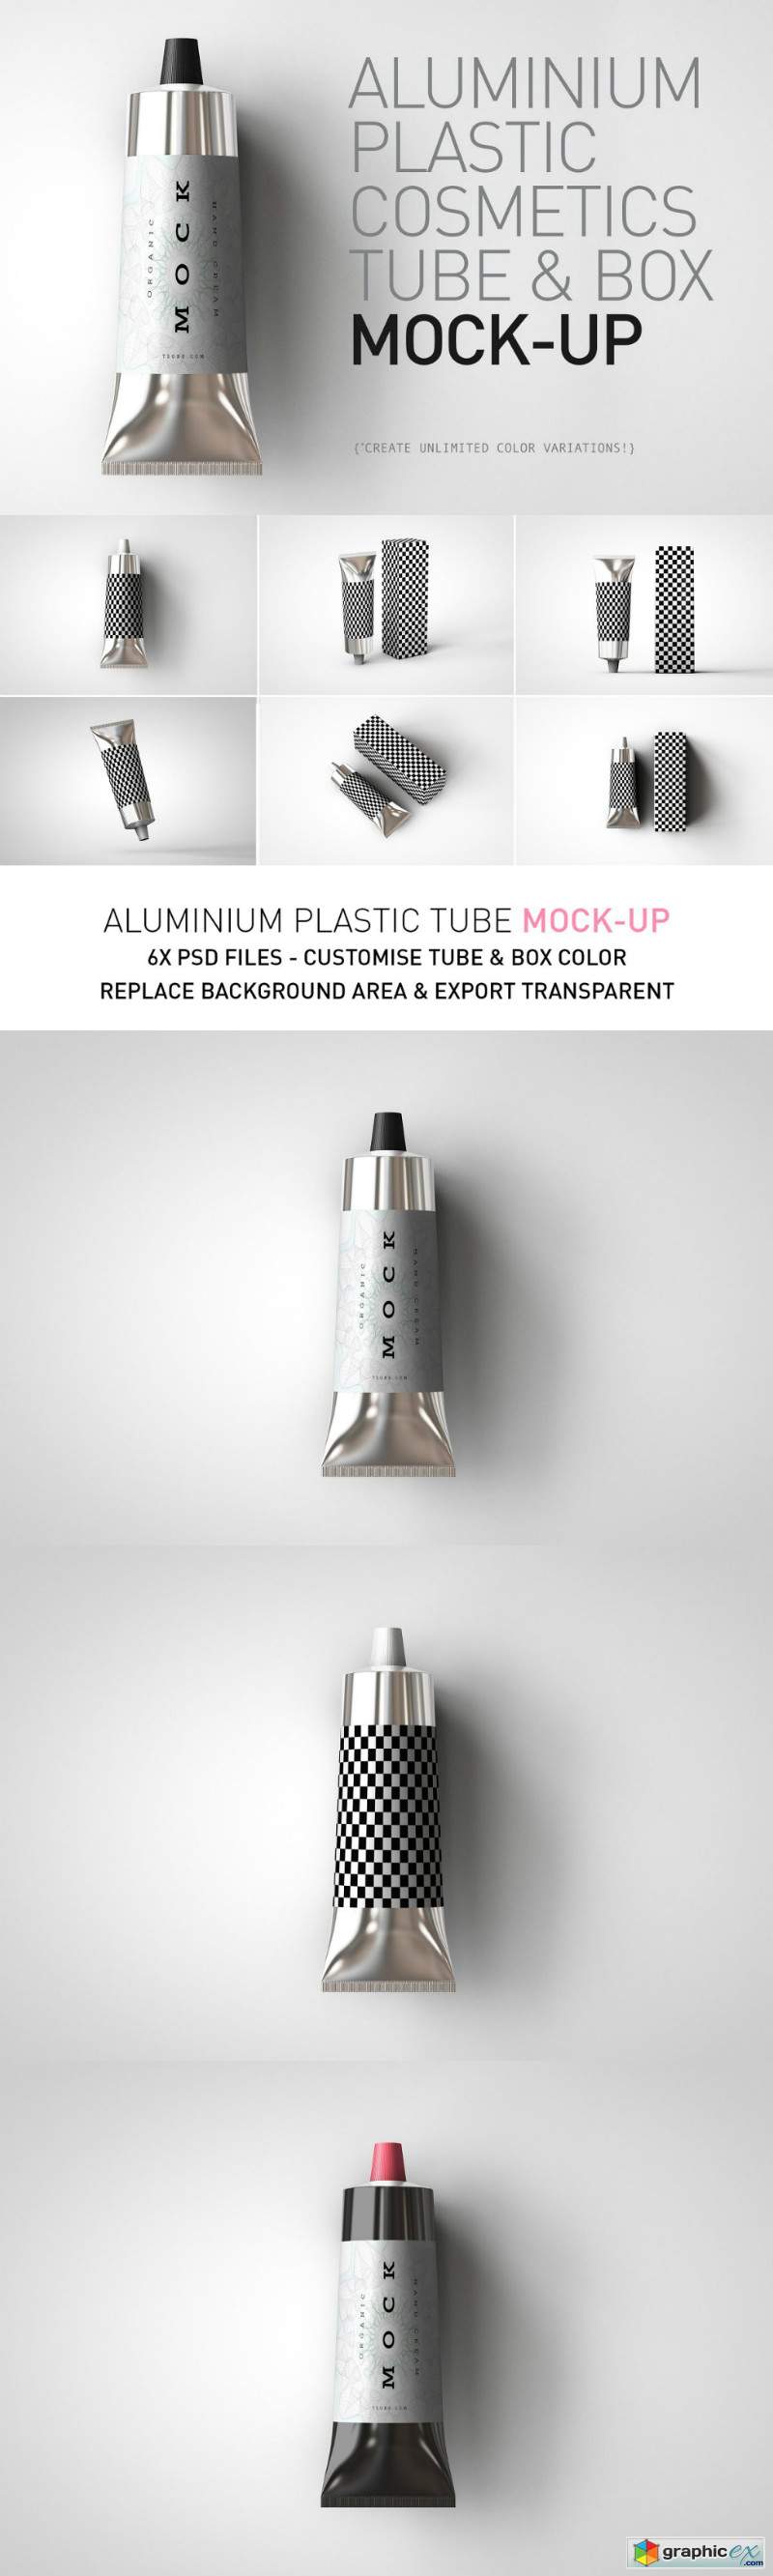 Aluminium Plastic Tube Mock-Up